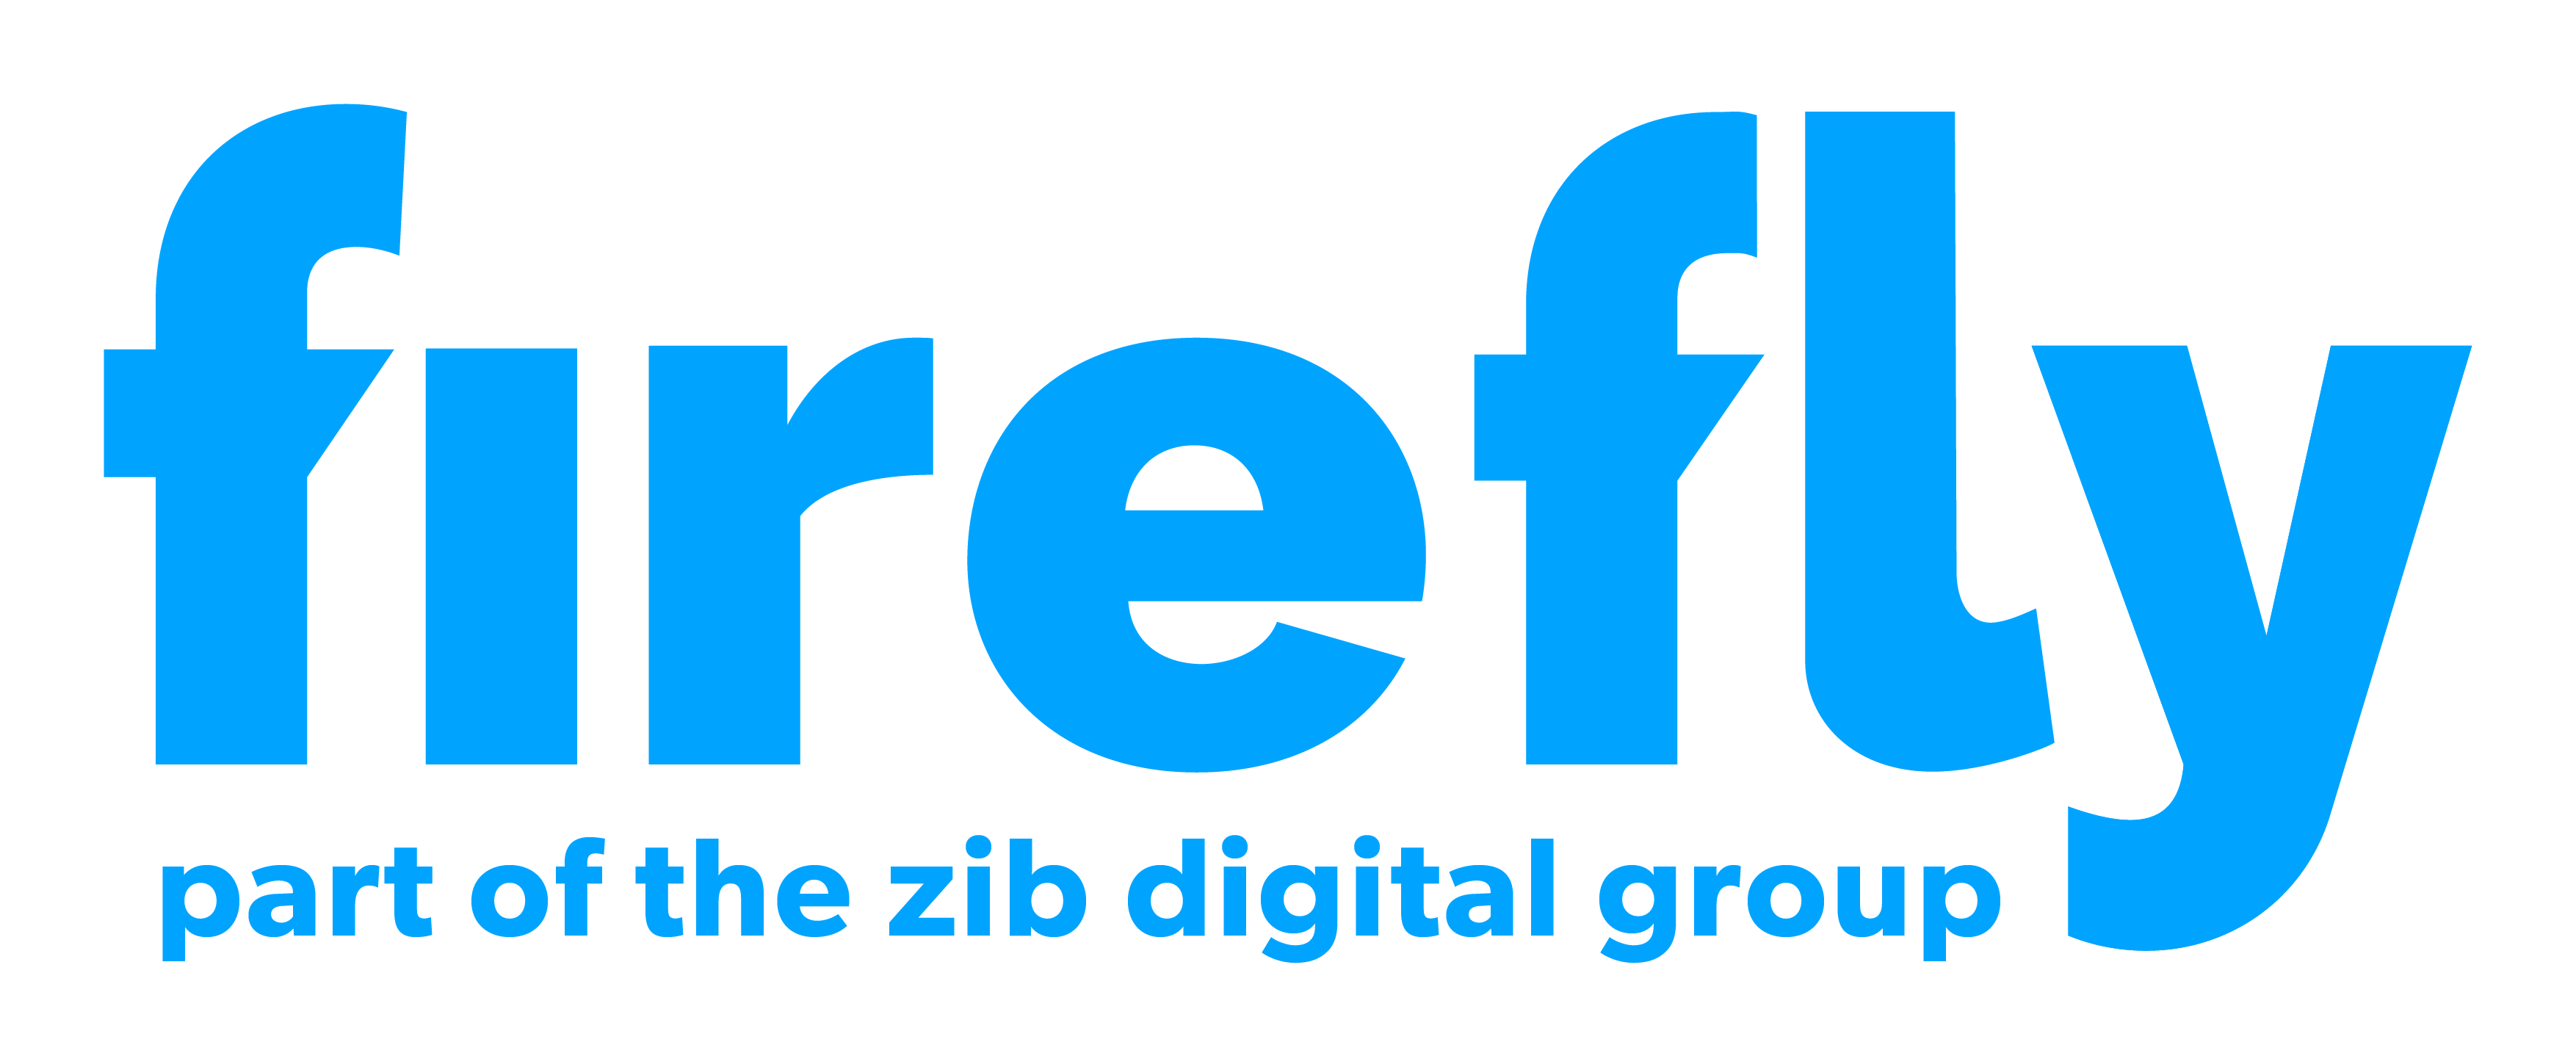 Firefly logo BLUE